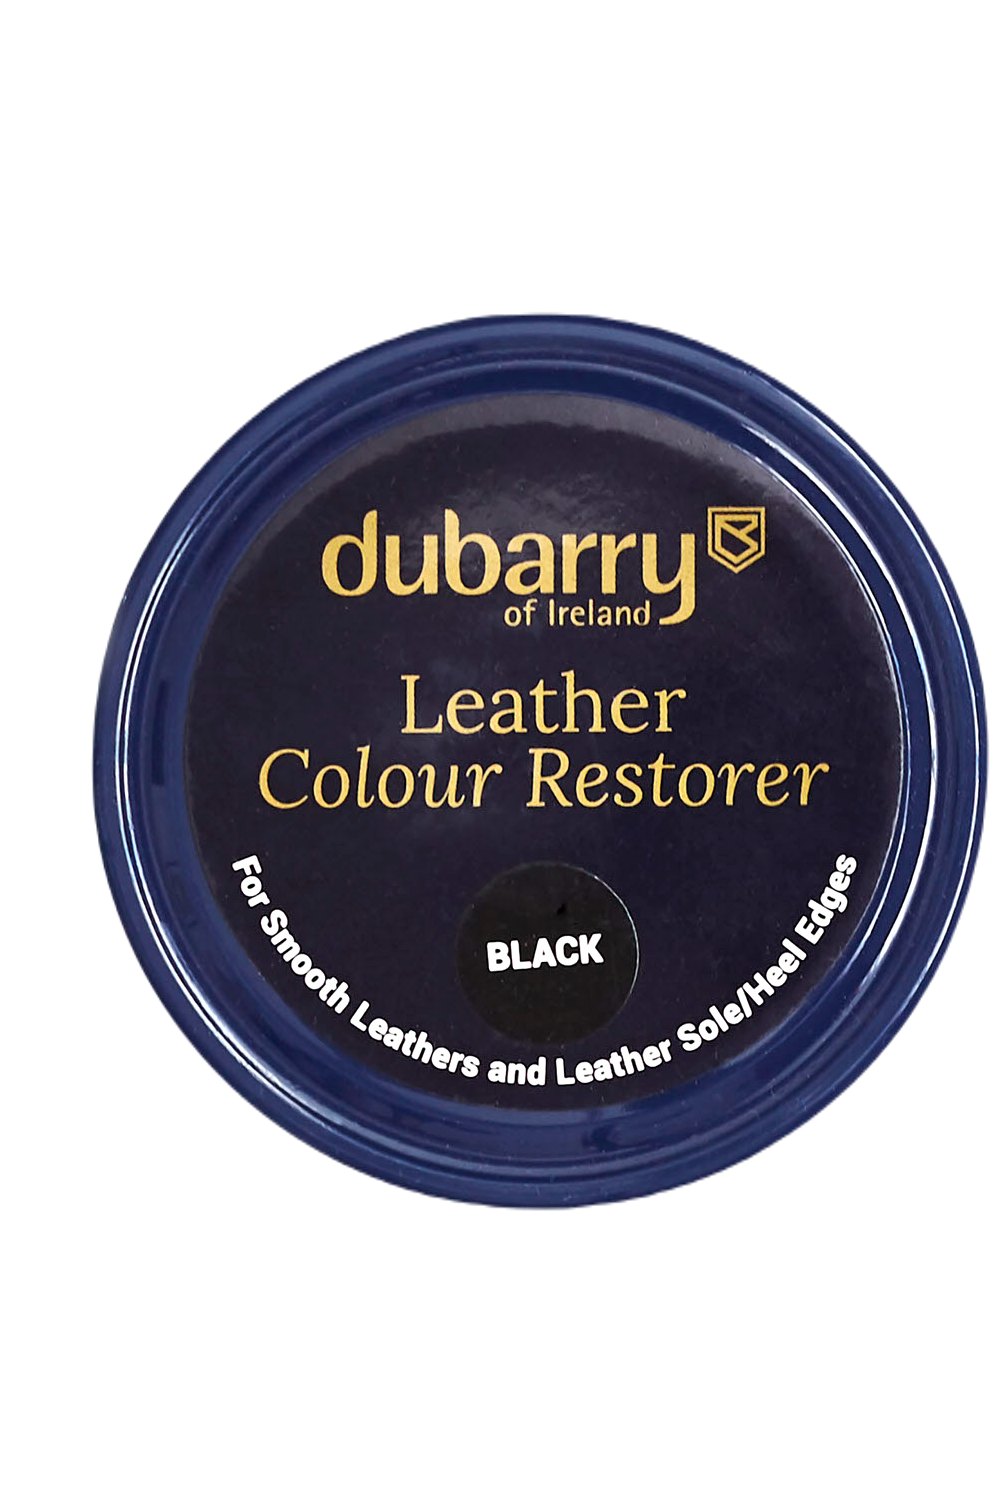 Dubarry Leather Colour Restorer In Black